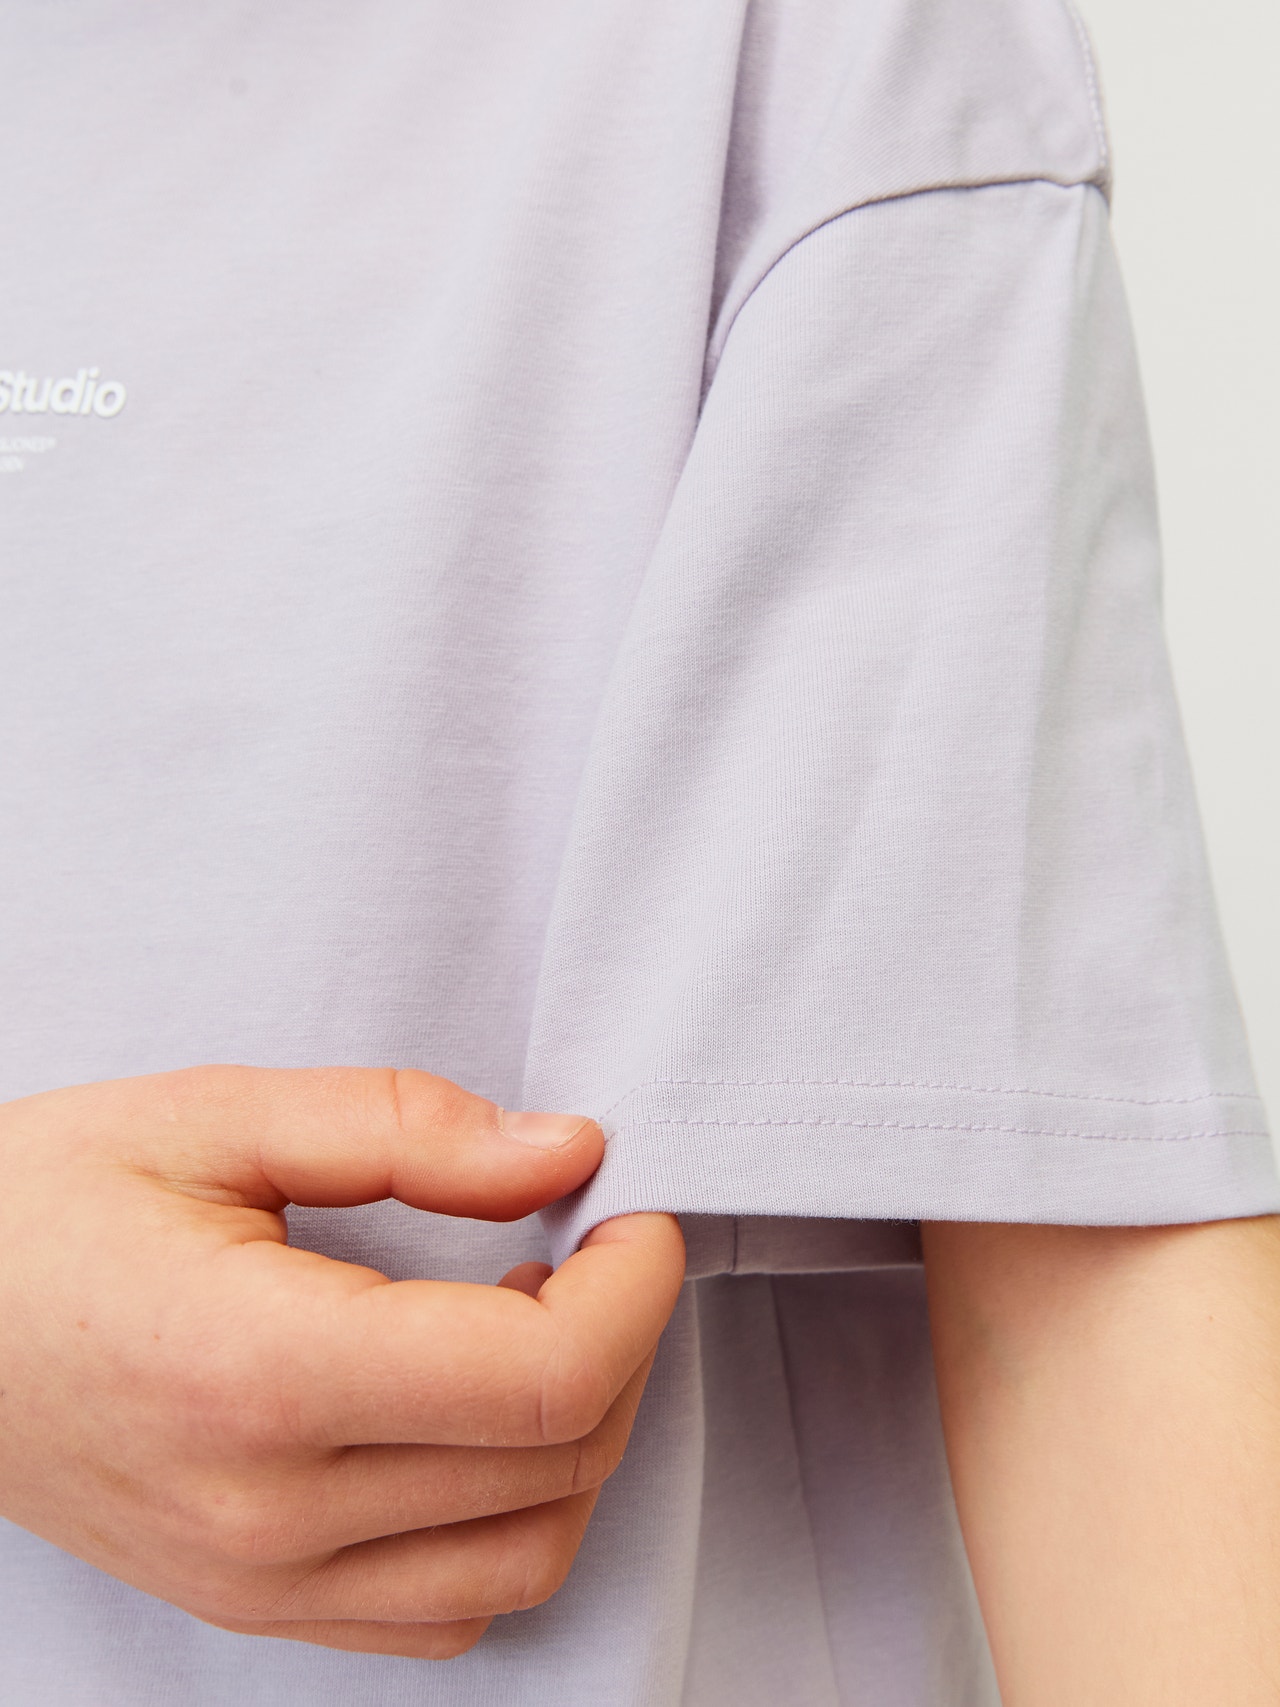 Jack & Jones T-shirt Stampato Per Bambino -Lavender Frost - 12242827